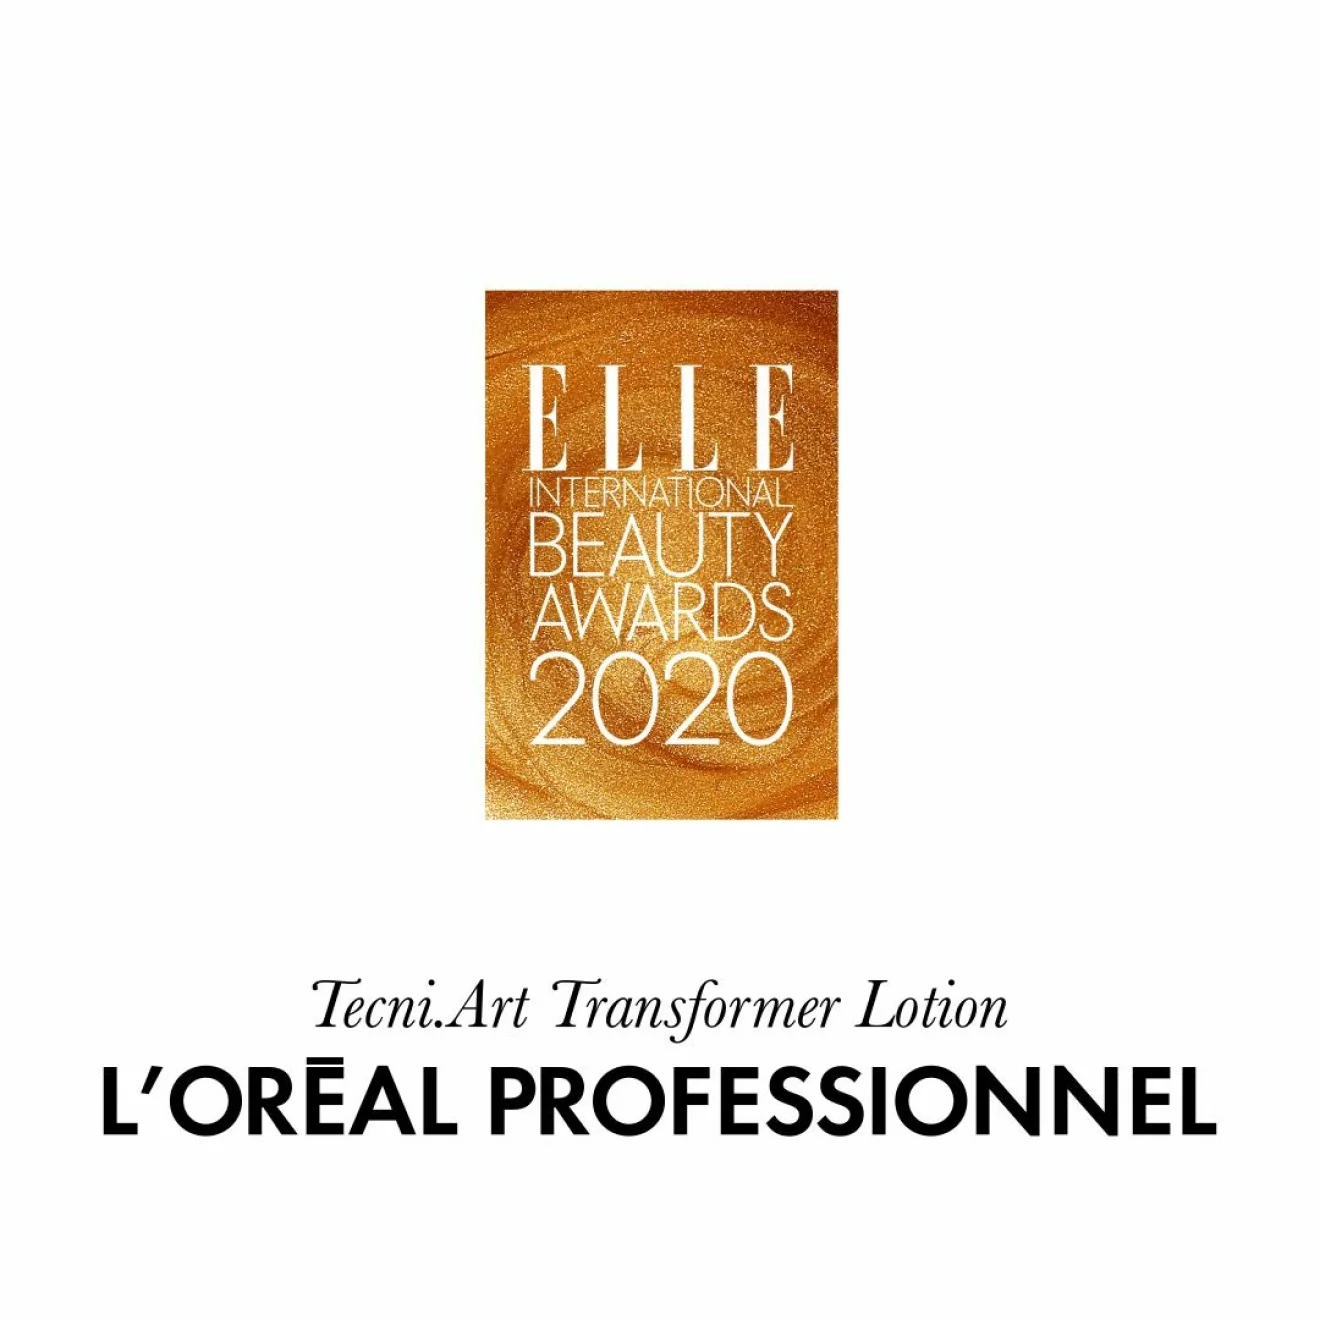 Årets hårstyling Tecni.art transformer lotion från L’Oréal Professionnel.